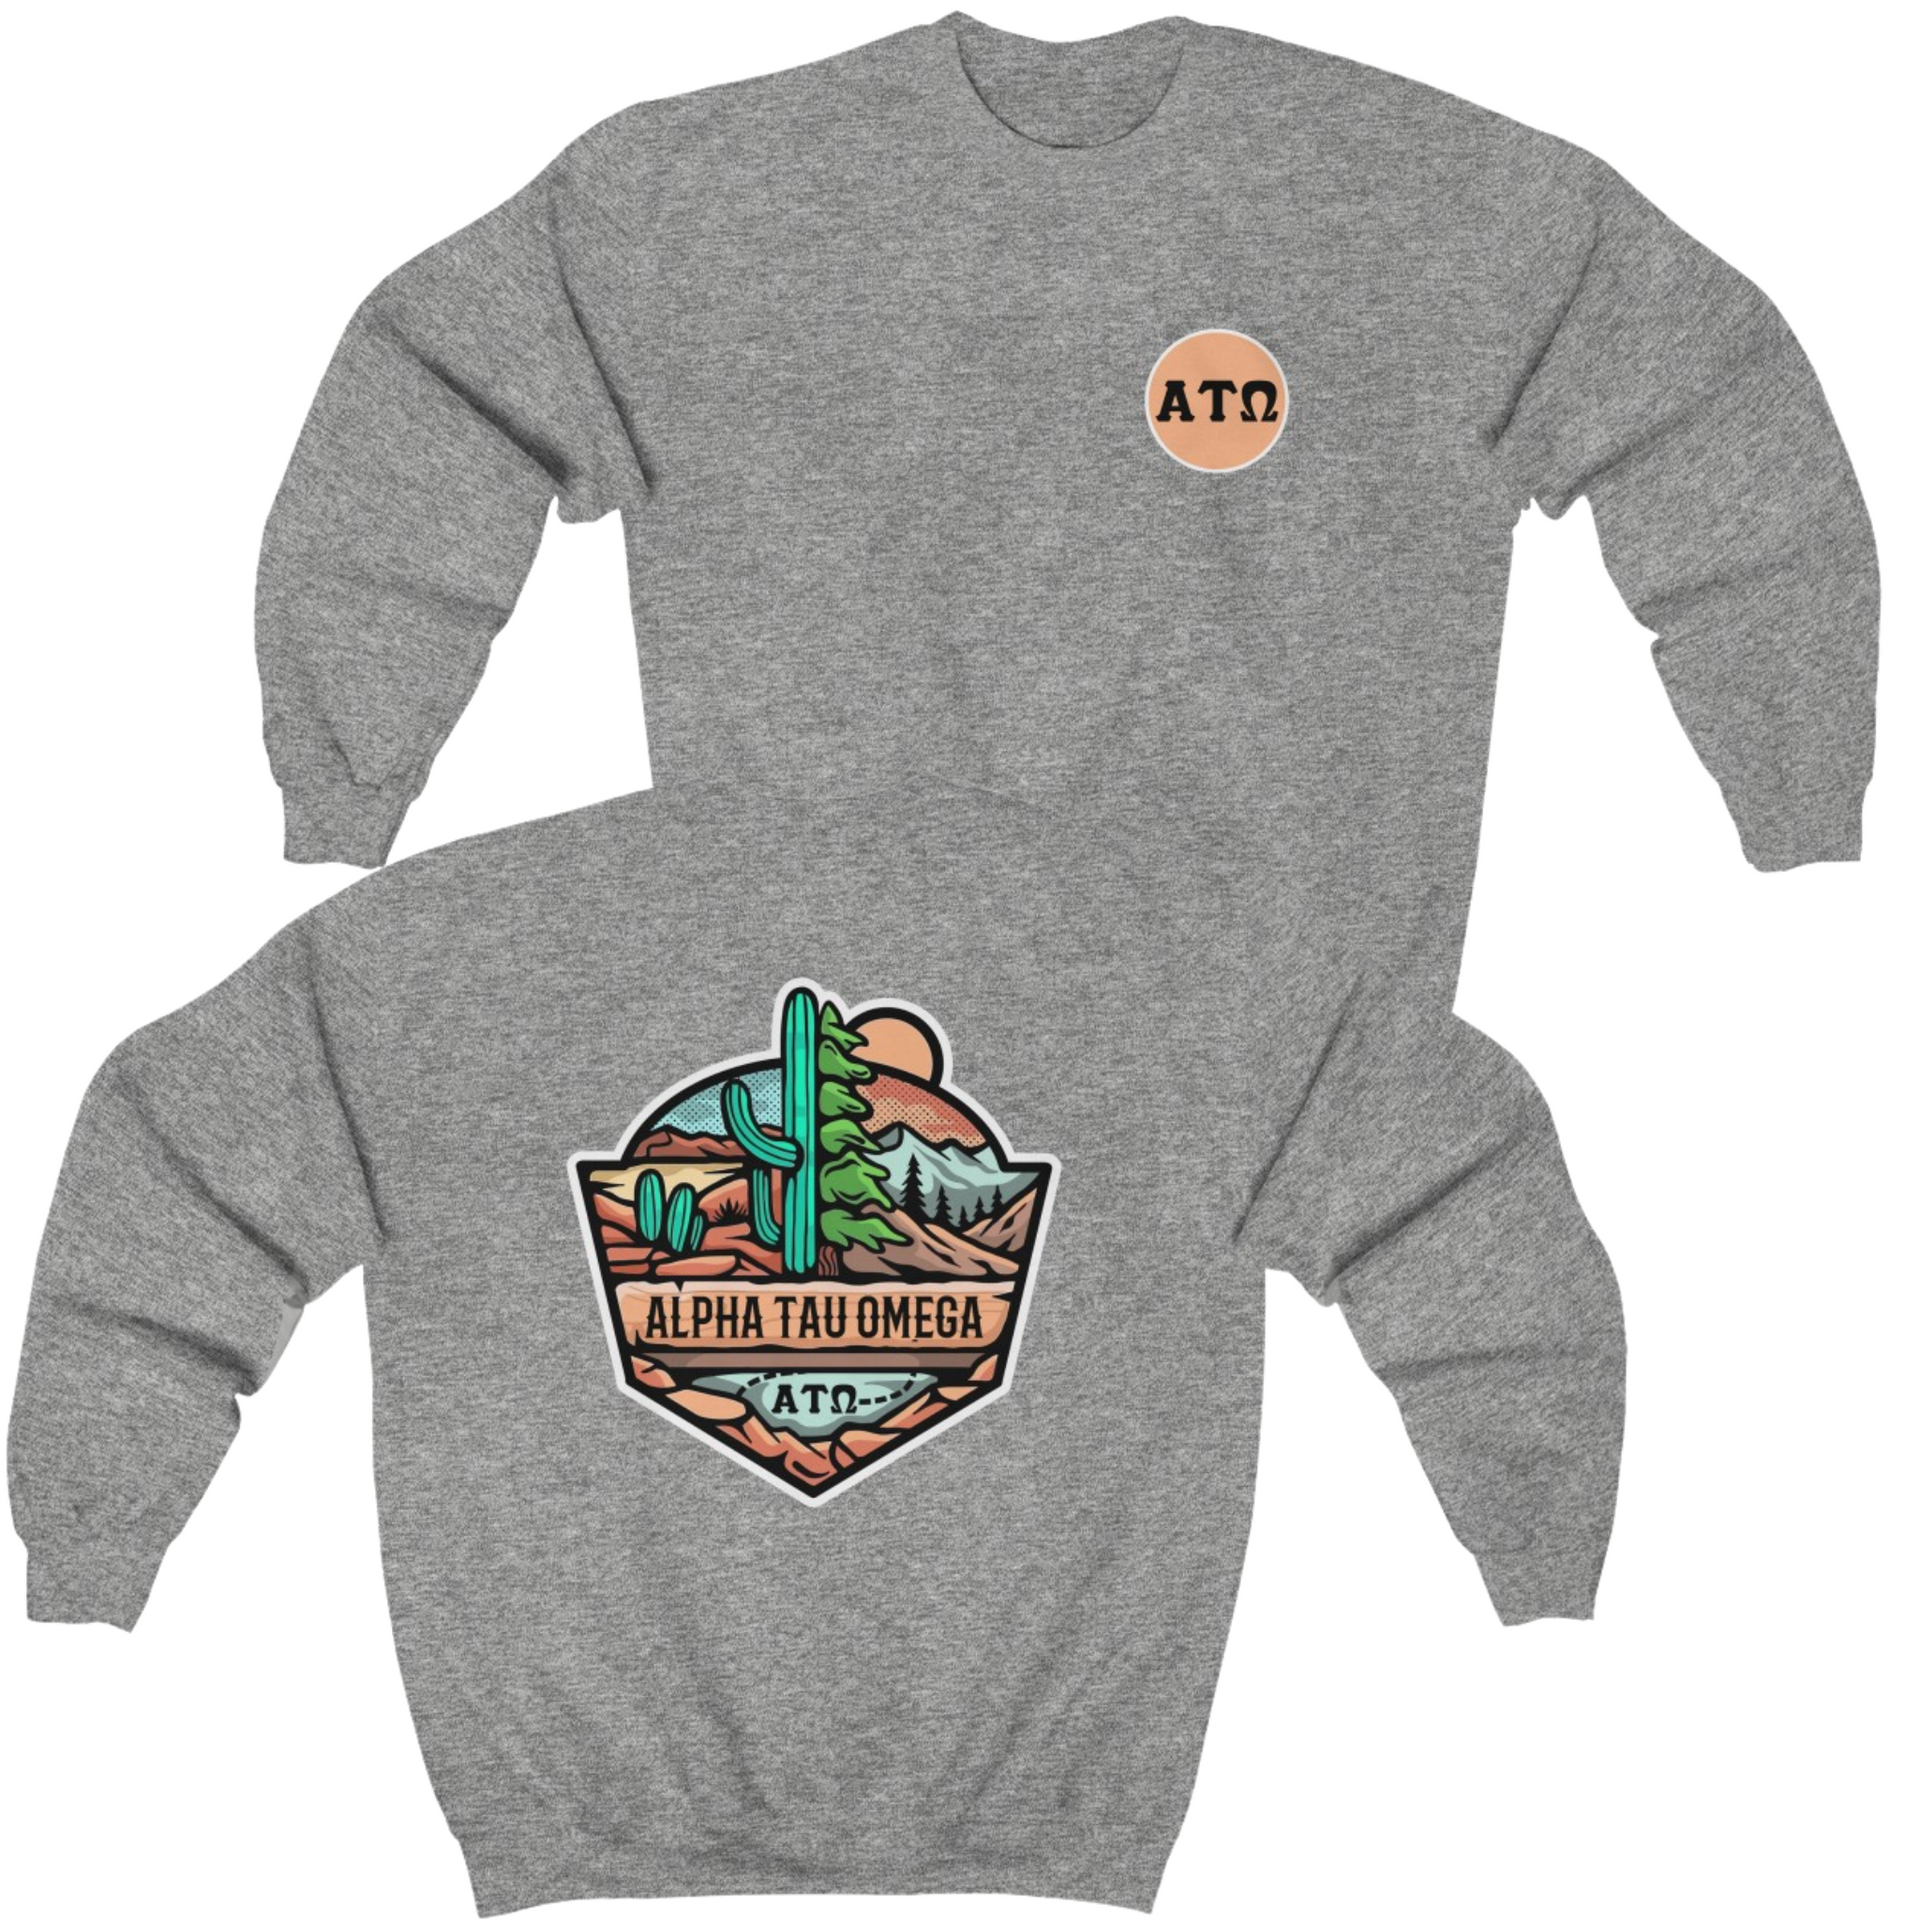 Grey Alpha Tau Omega Graphic Crewneck Sweatshirt | Desert Mountains | Alpha Tau Omega Fraternity Merch